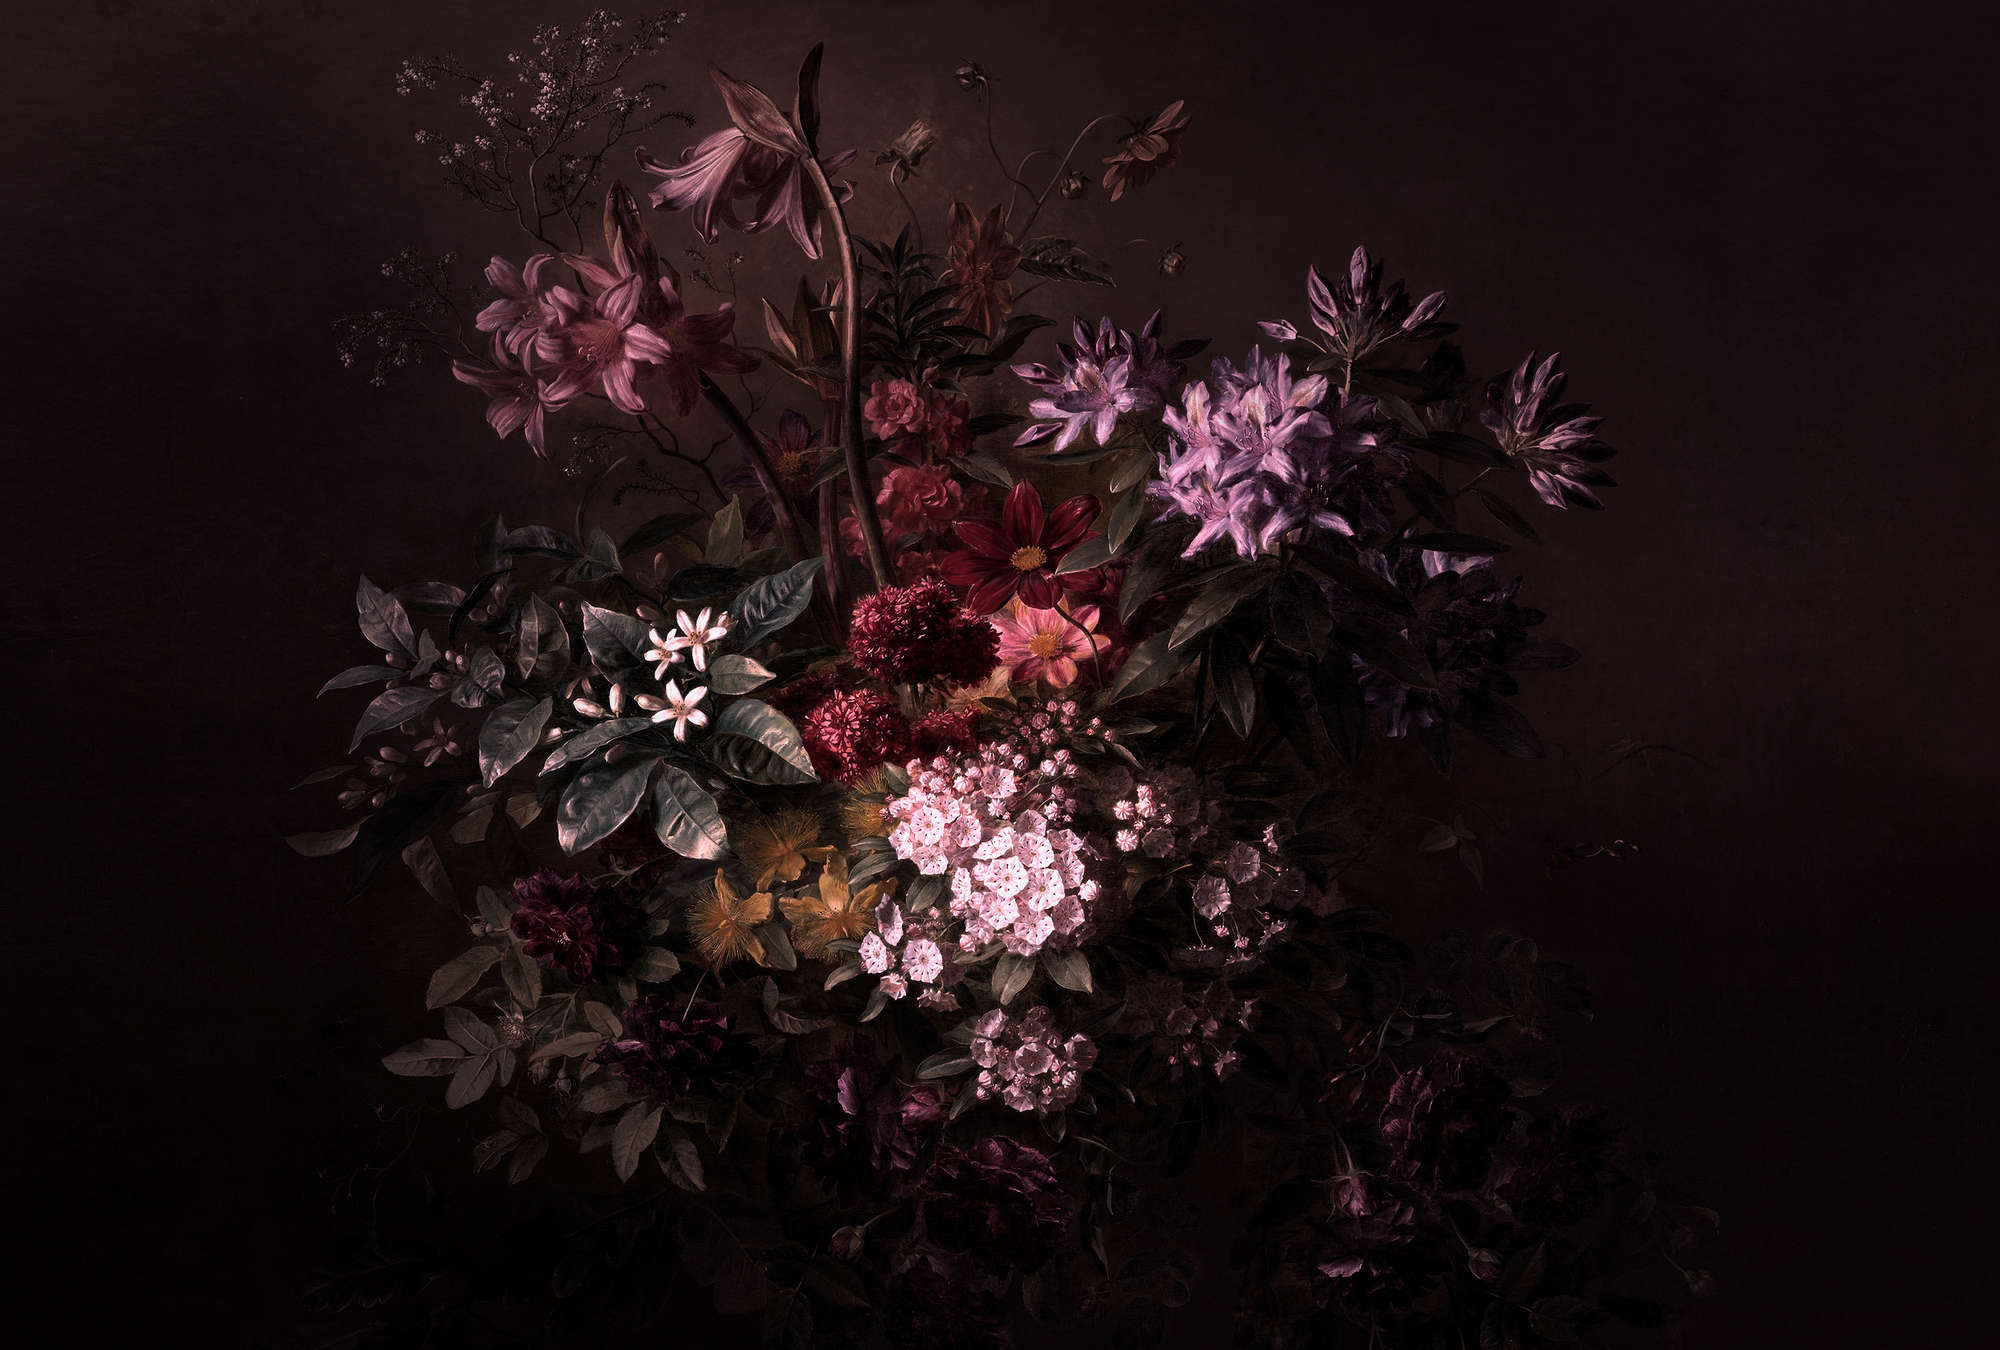             Papel pintado Naturaleza muerta de flores - Walls by Patel
        